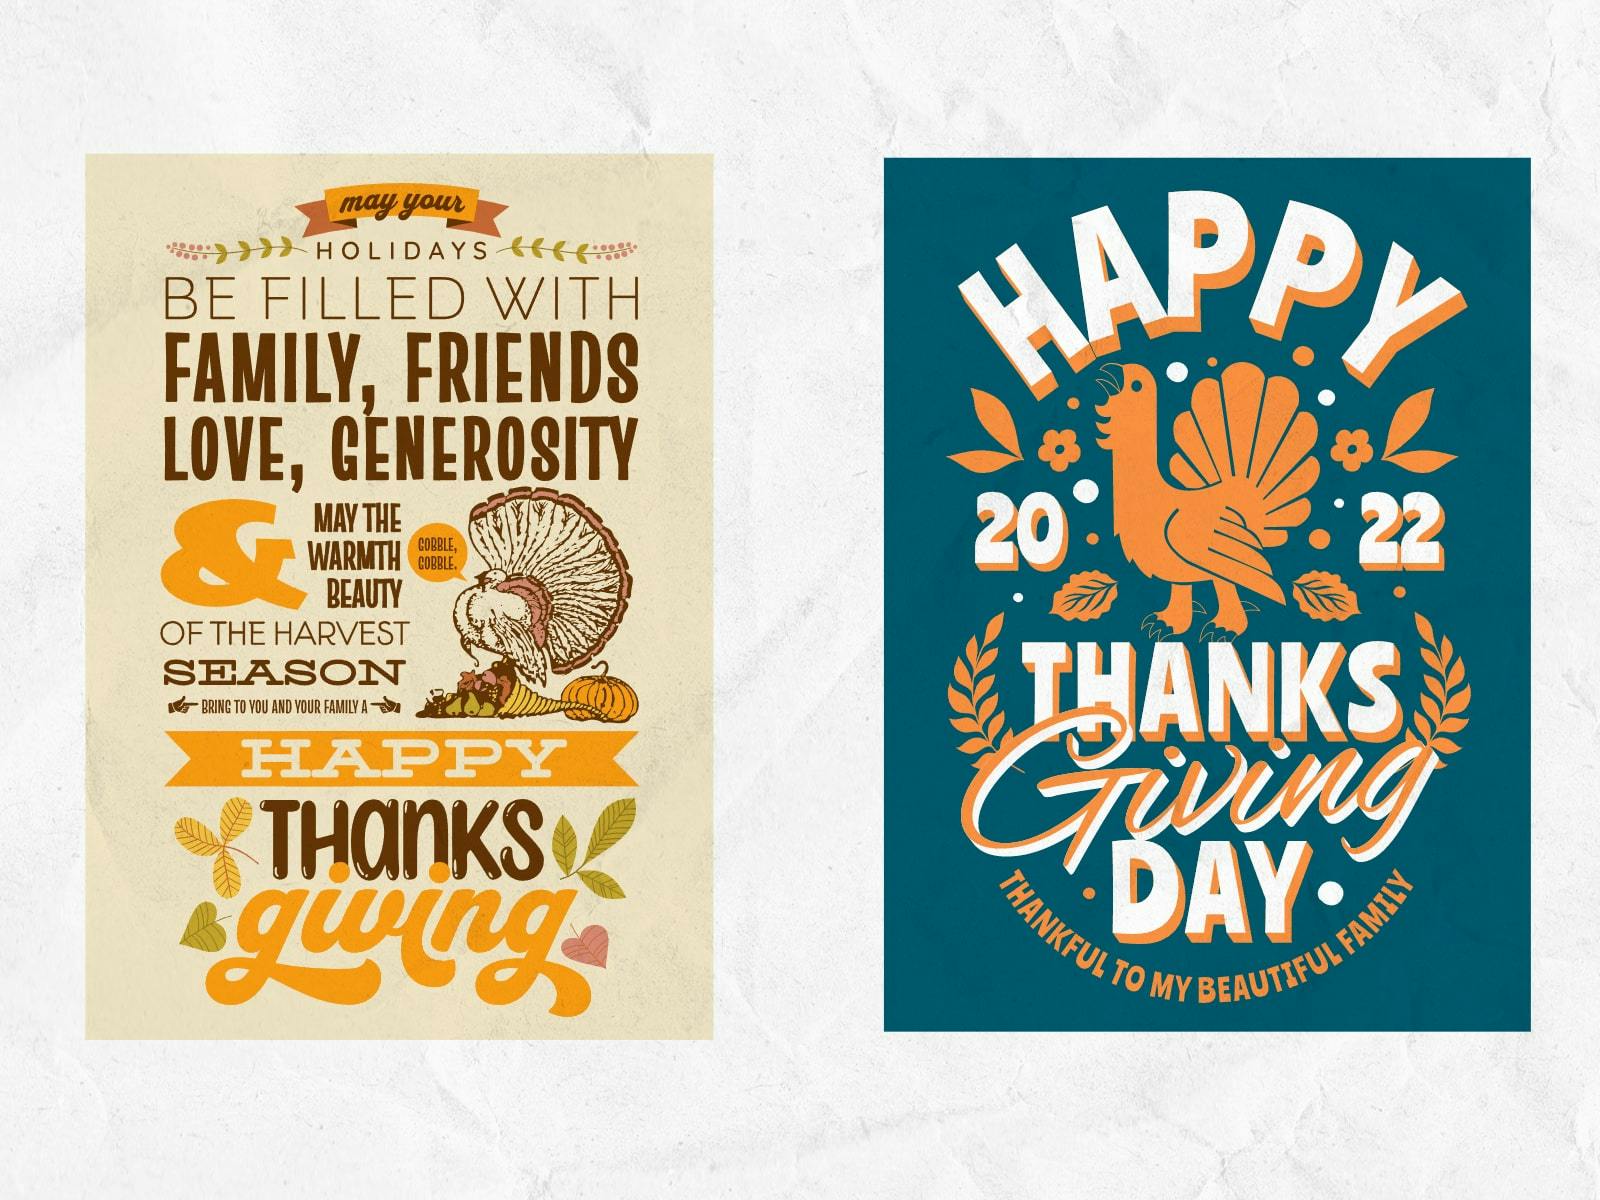 Thanksgiving Greeting & Invitation Card: Collection of Thanksgiving greeting and invitation cards